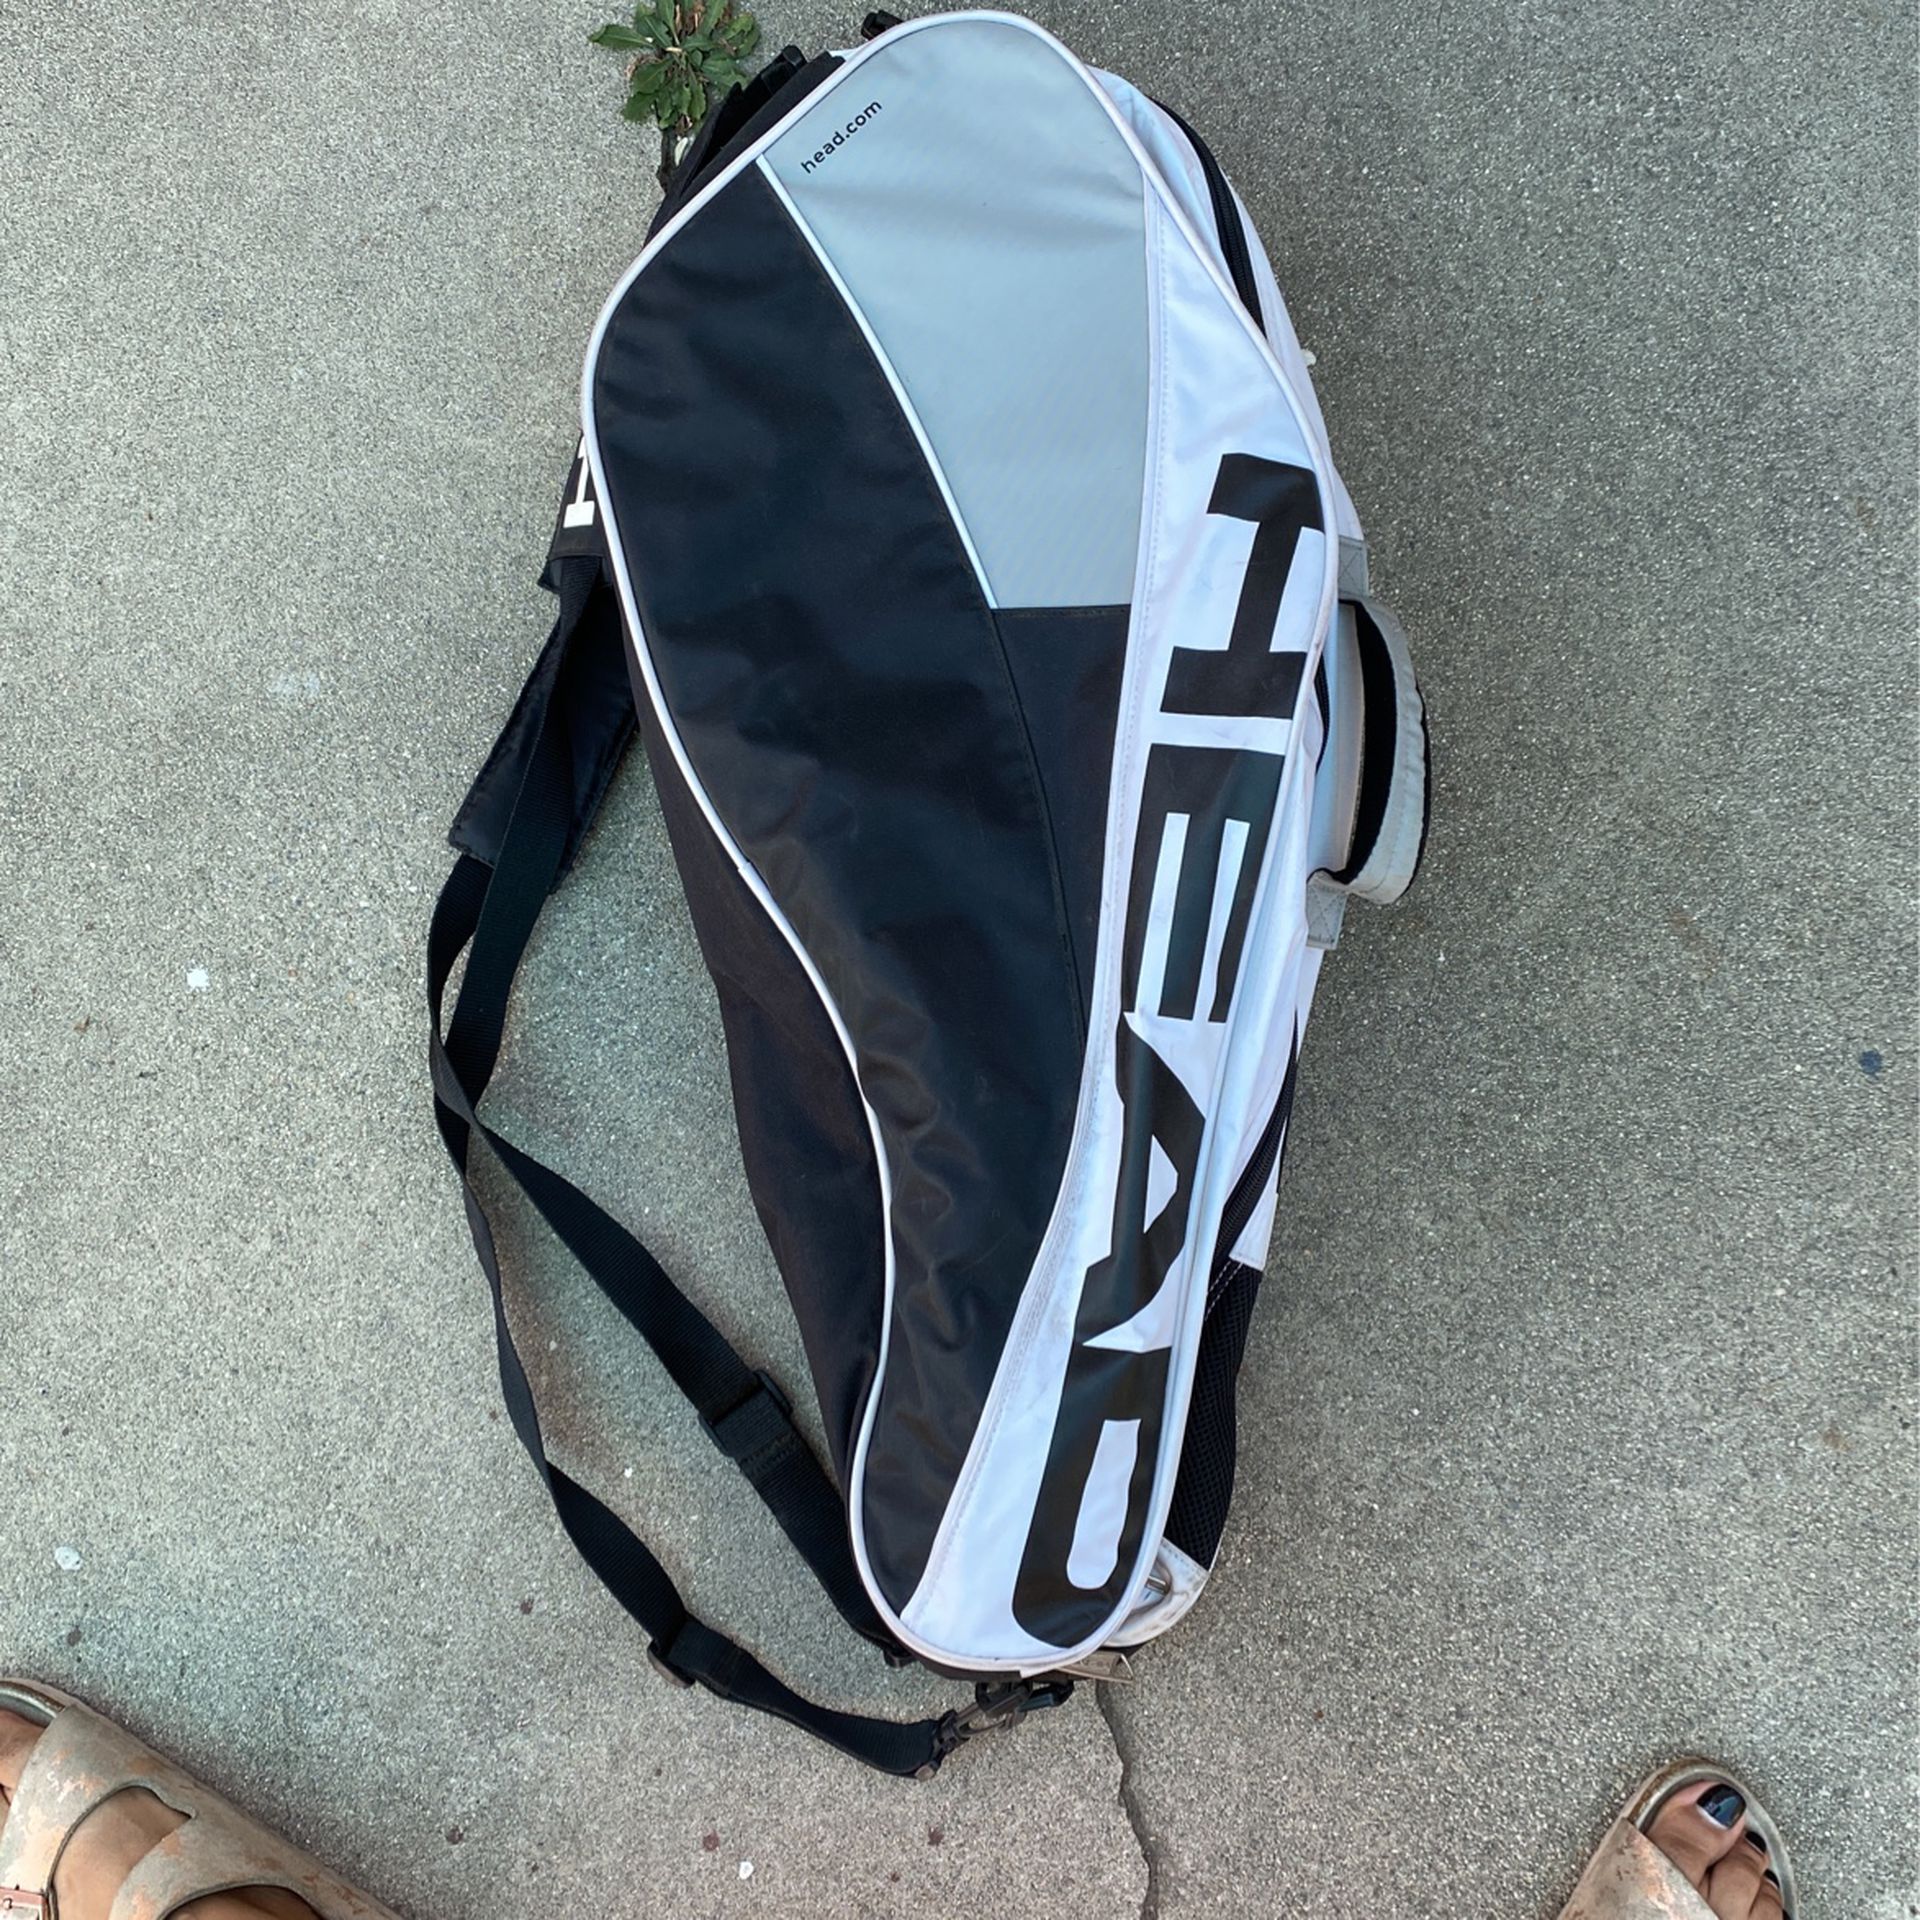 Tennis Gear - Double Bag , Two Rackets , Balls 